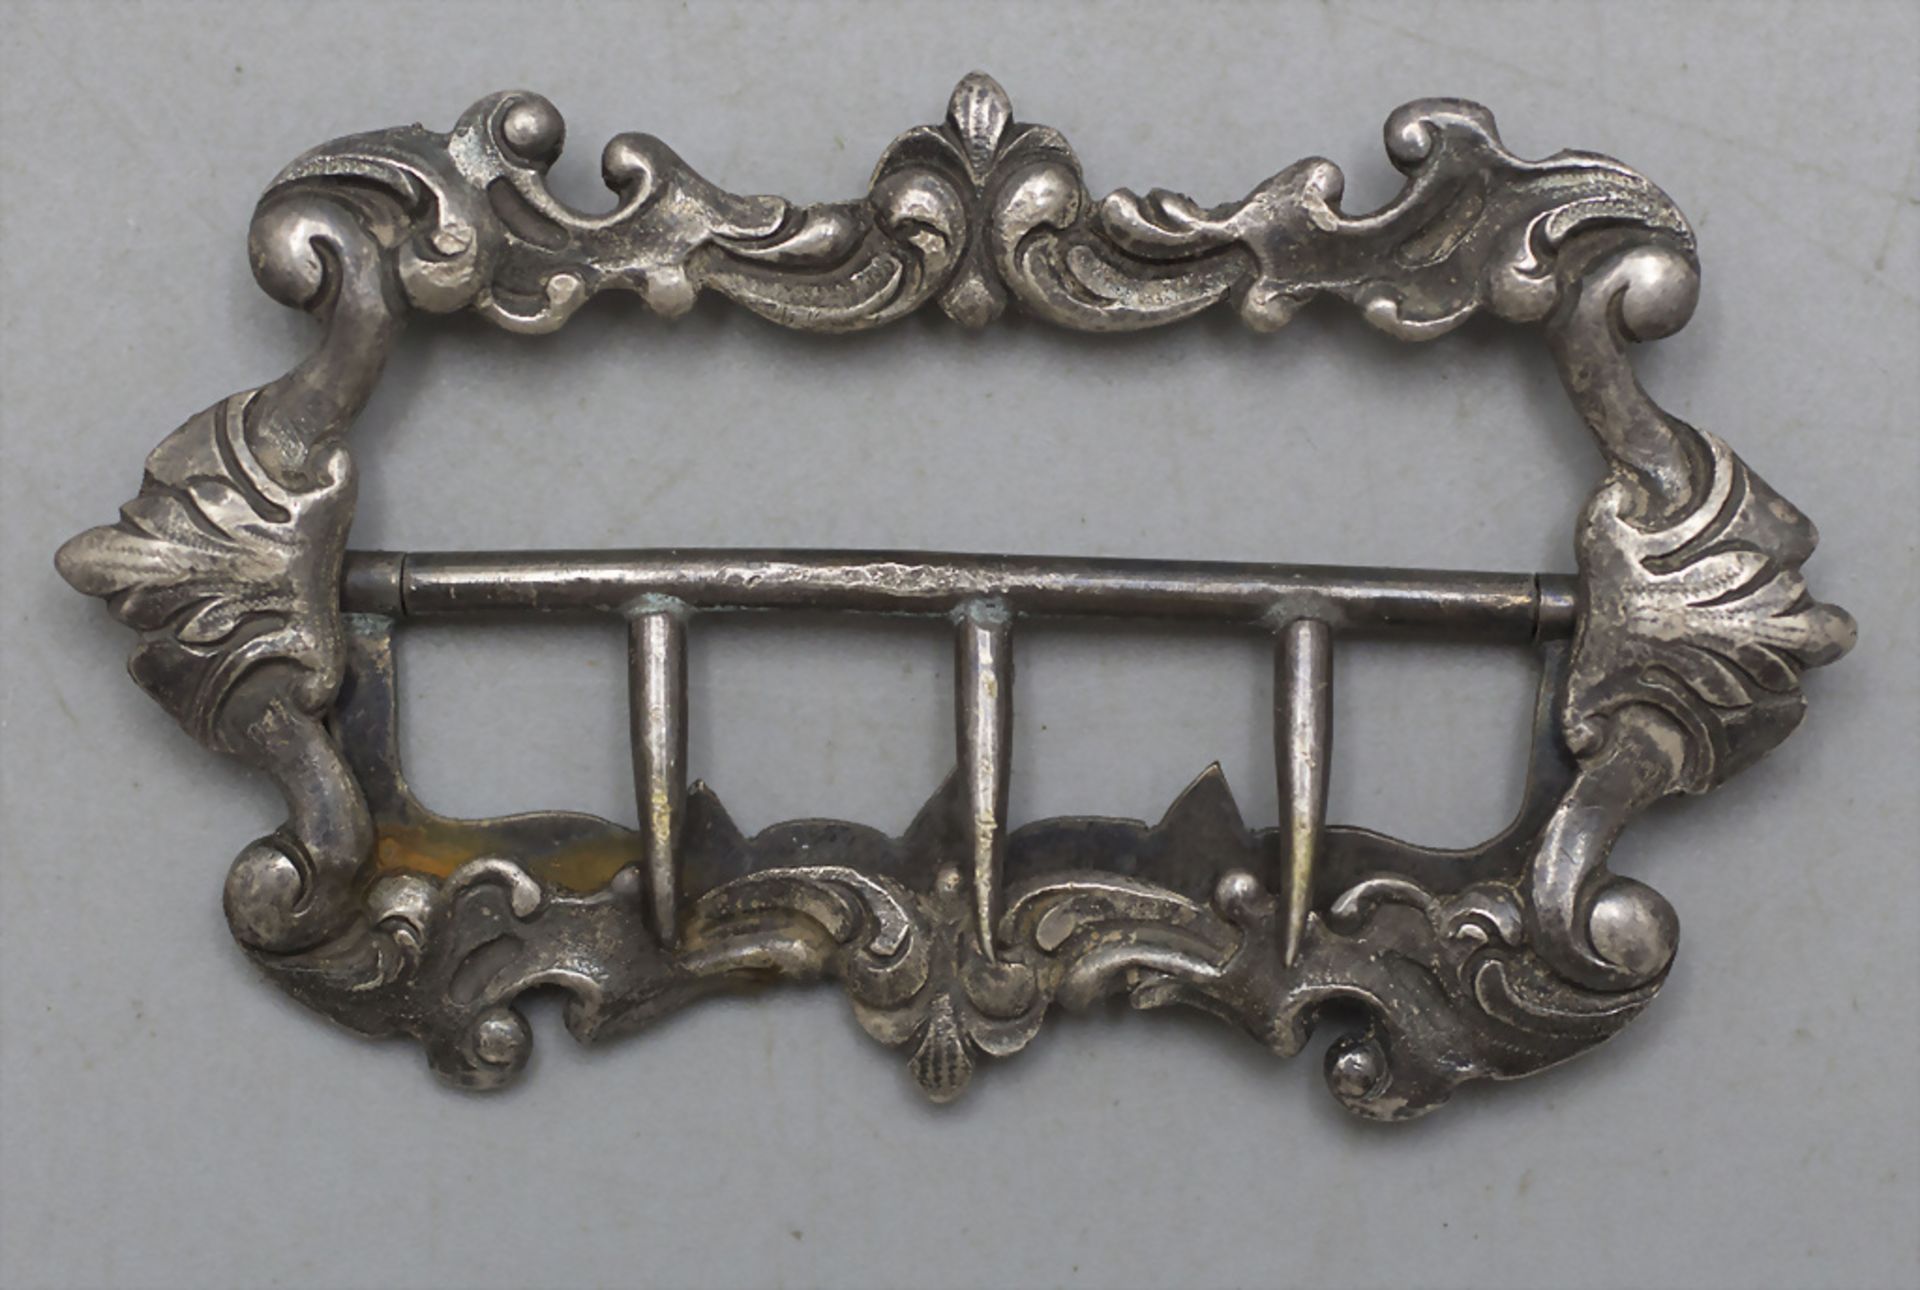 Silber Gürtelschließe / A silver belt buckle, Frankreich, 2. Hälfte 19. Jh.